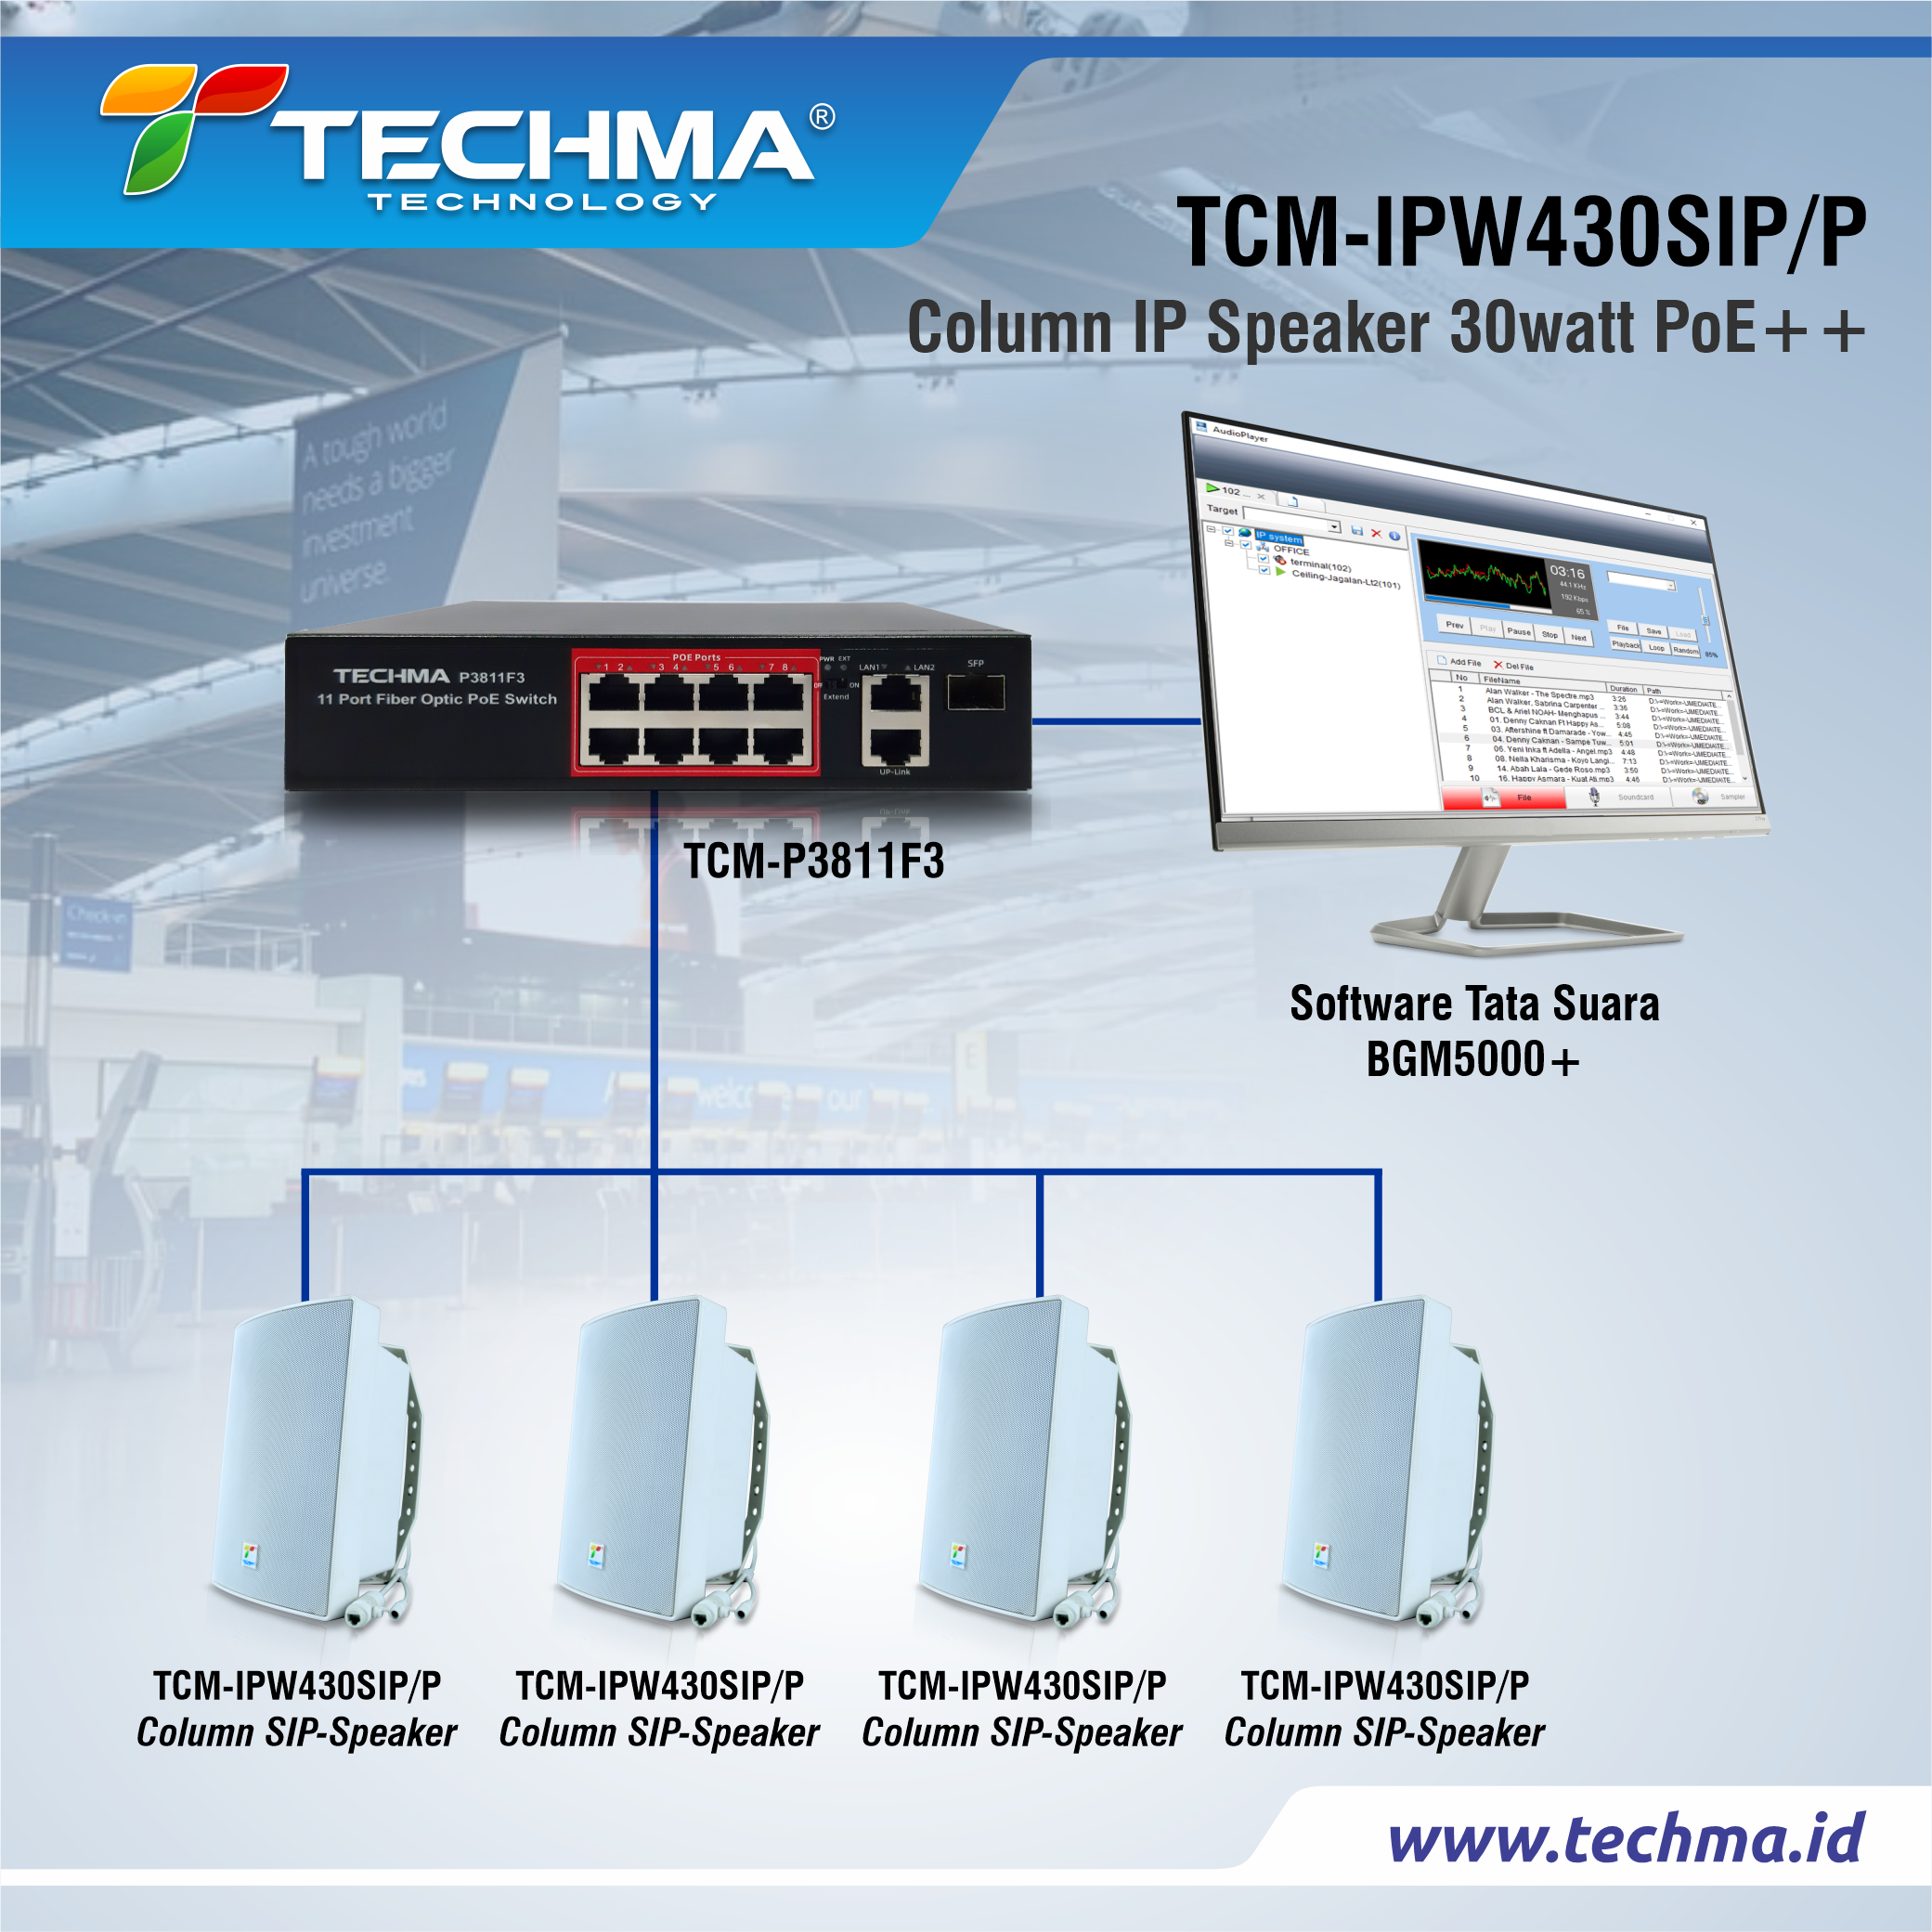 TCM-IPW430SIP P web 4